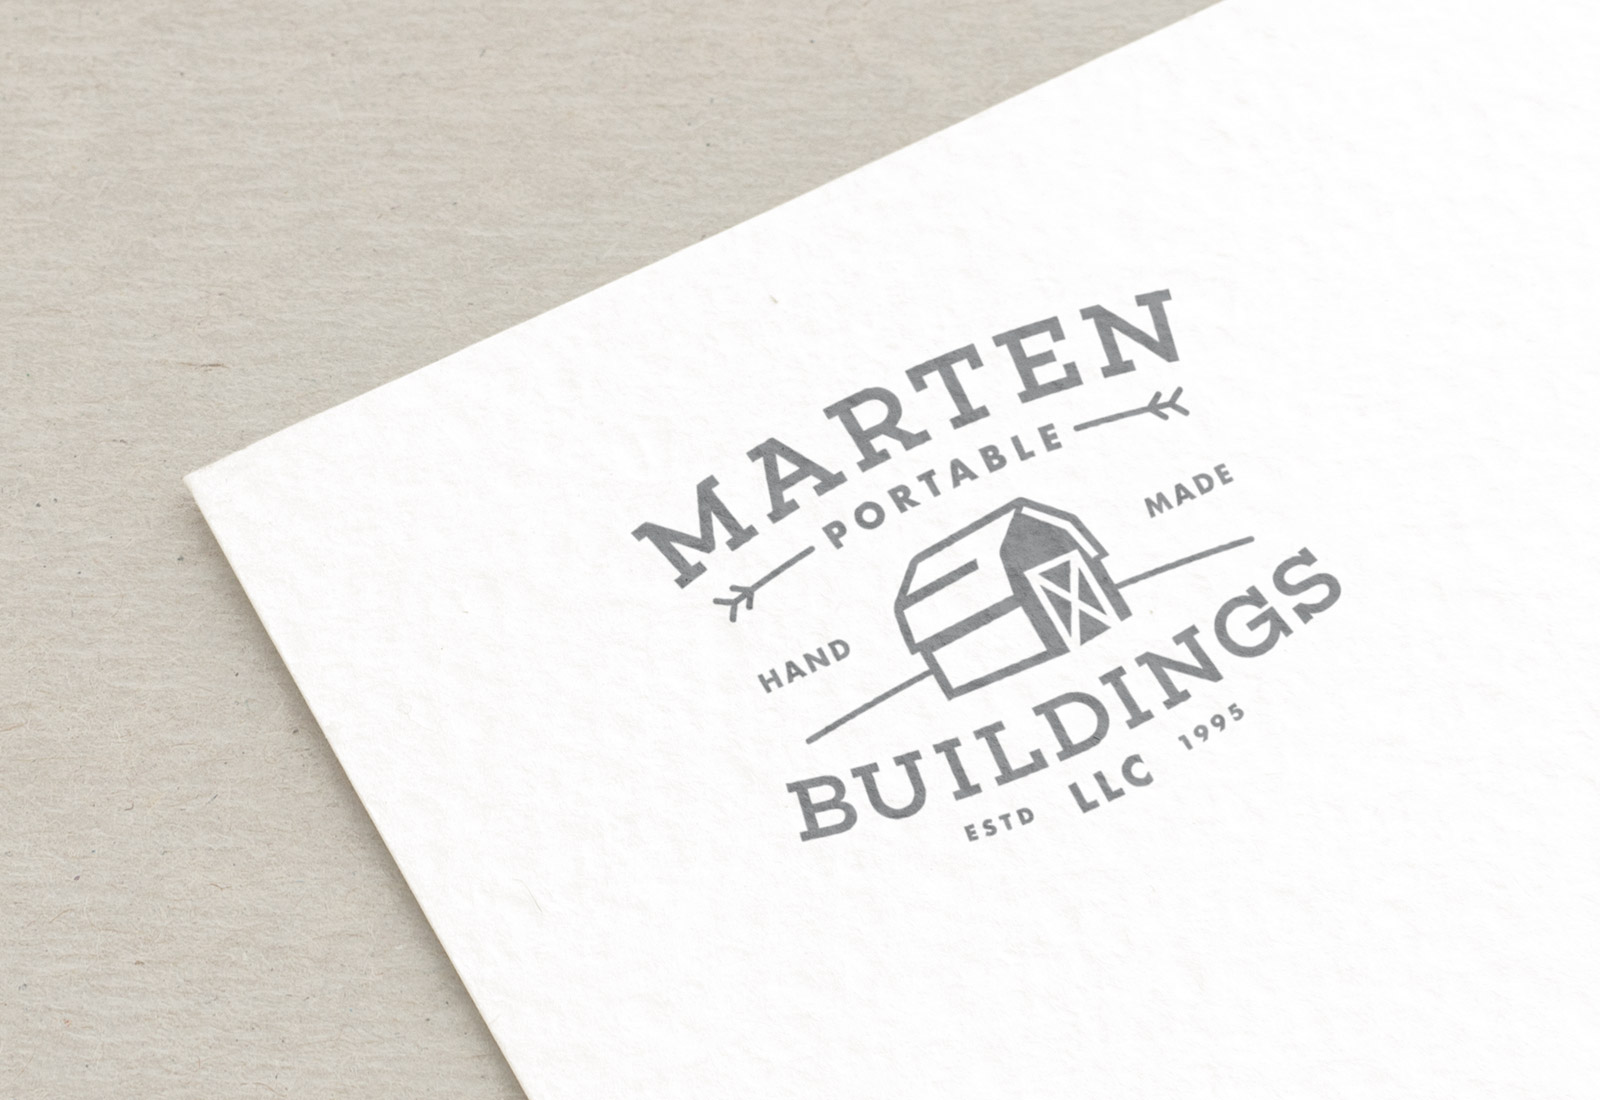 Marten Portable Buildings logo on paper